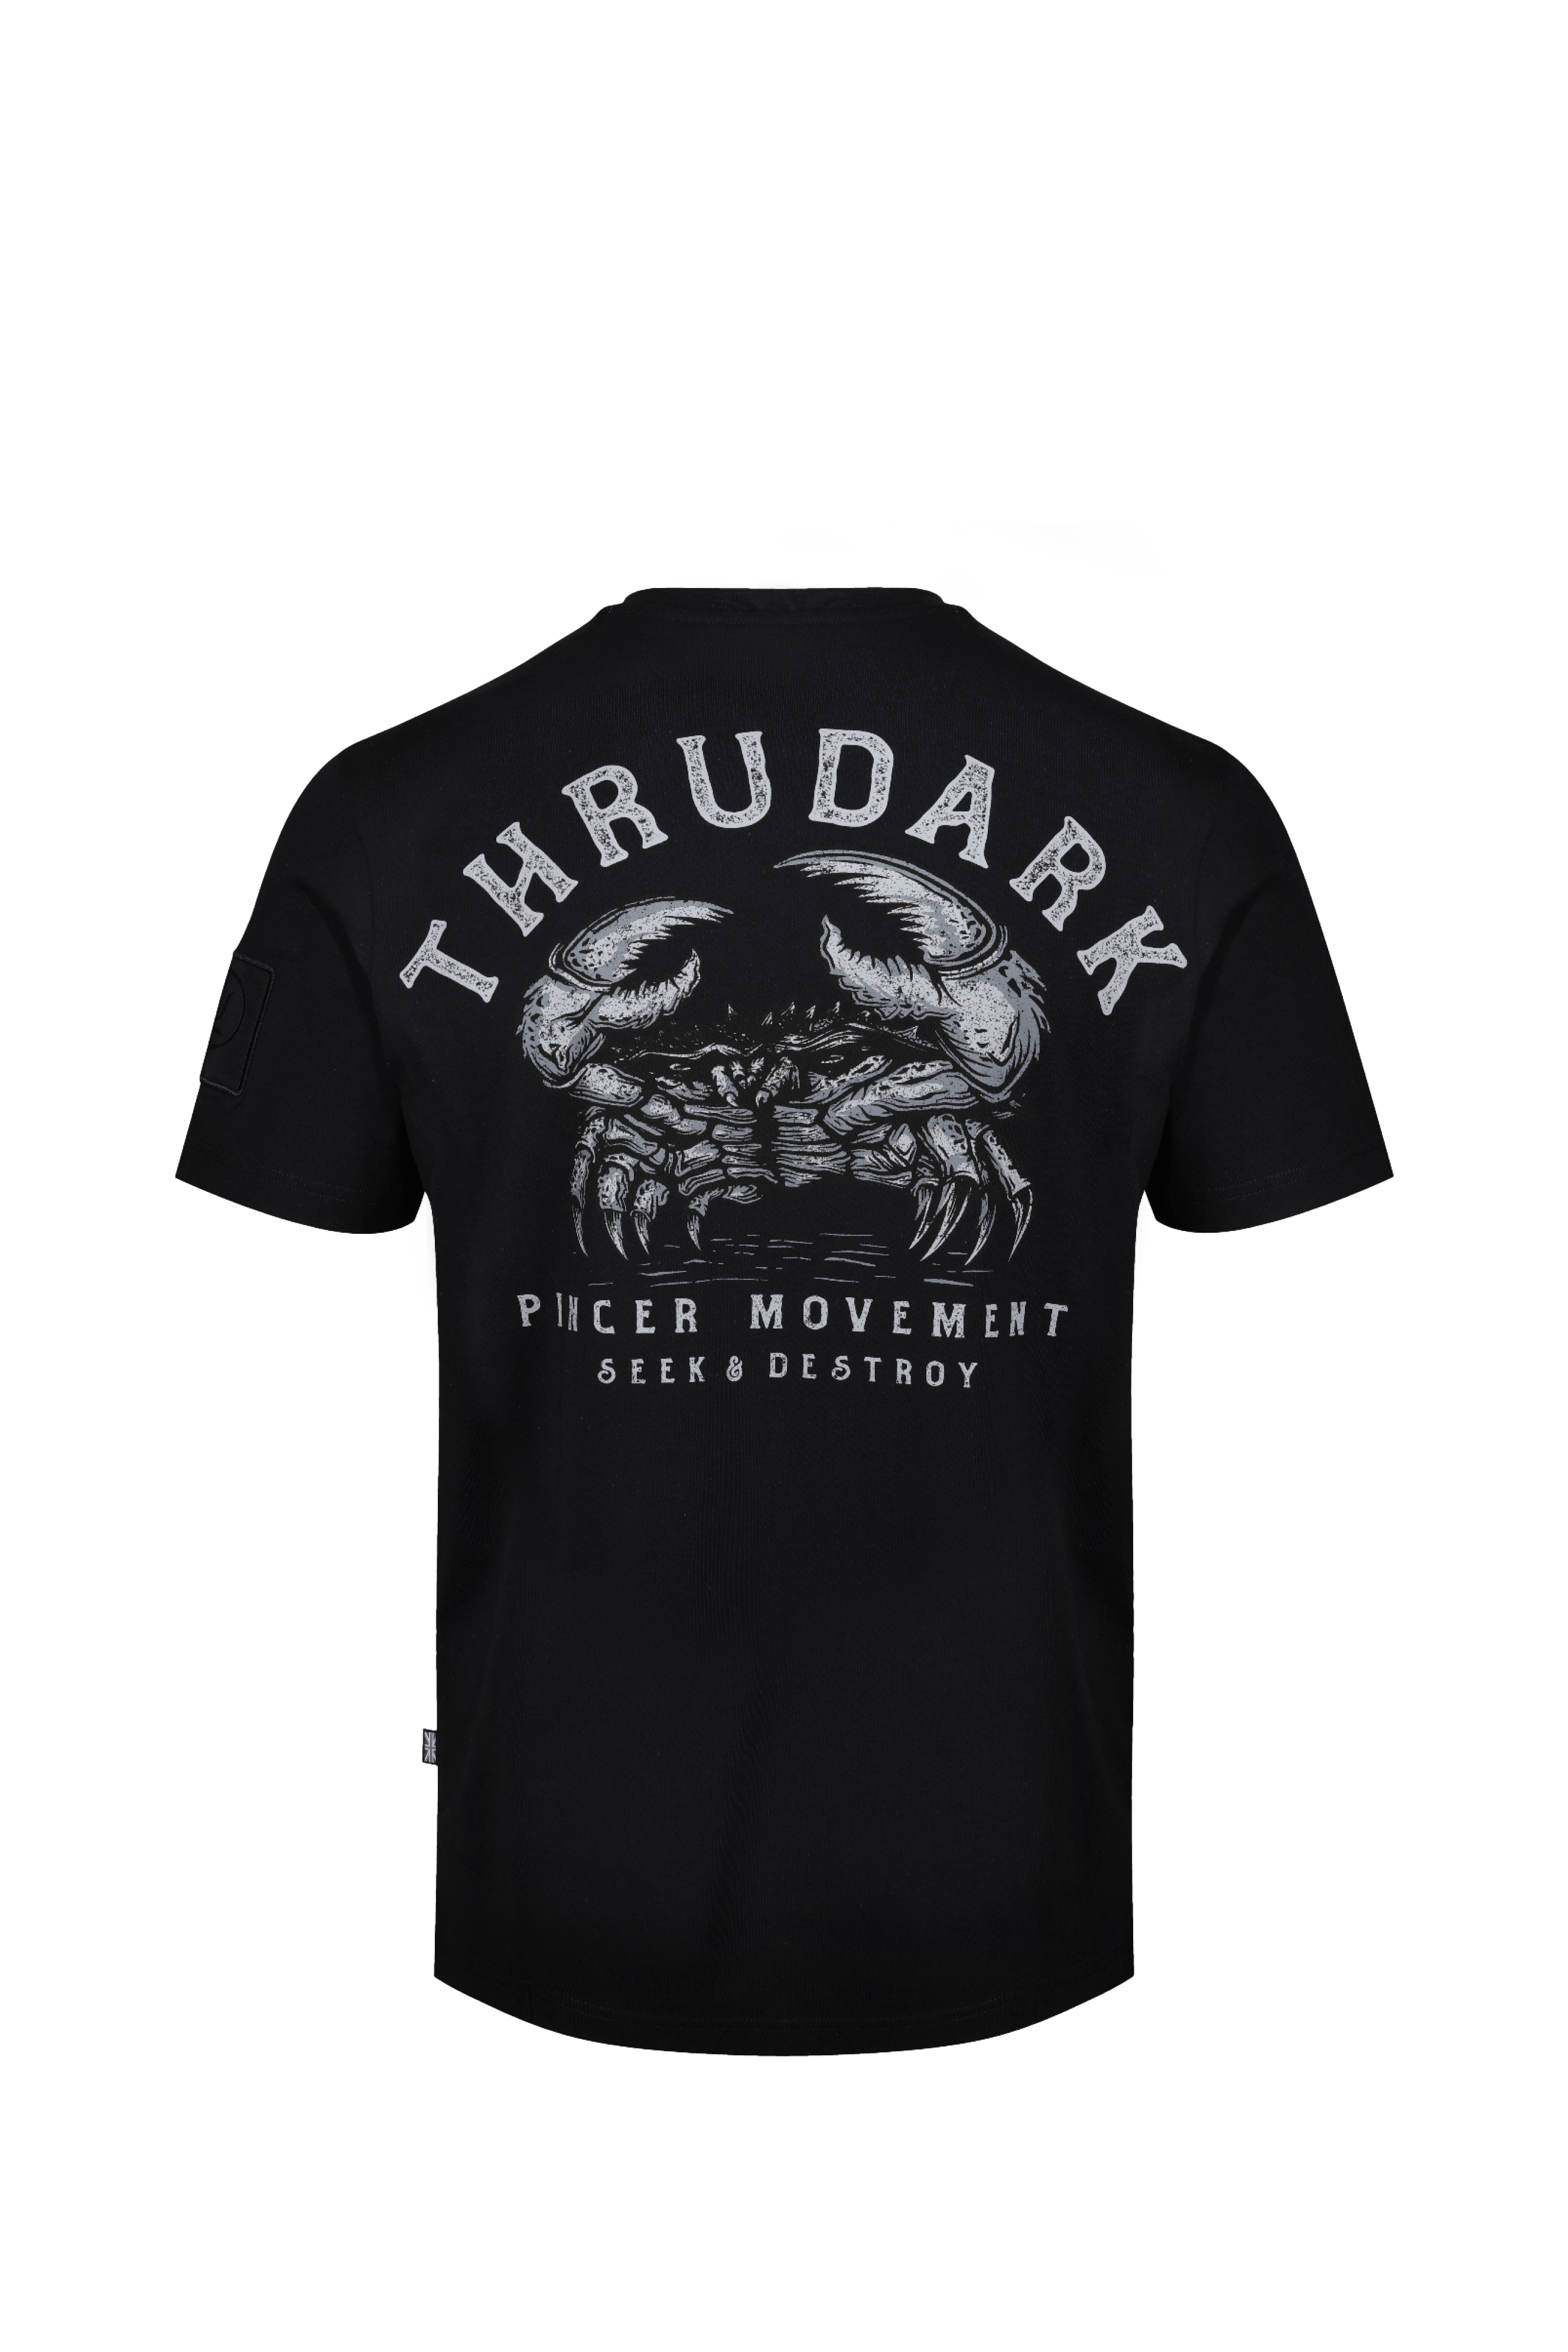 Thrudark  Insignia T-shirt - Pincer Movement Medium